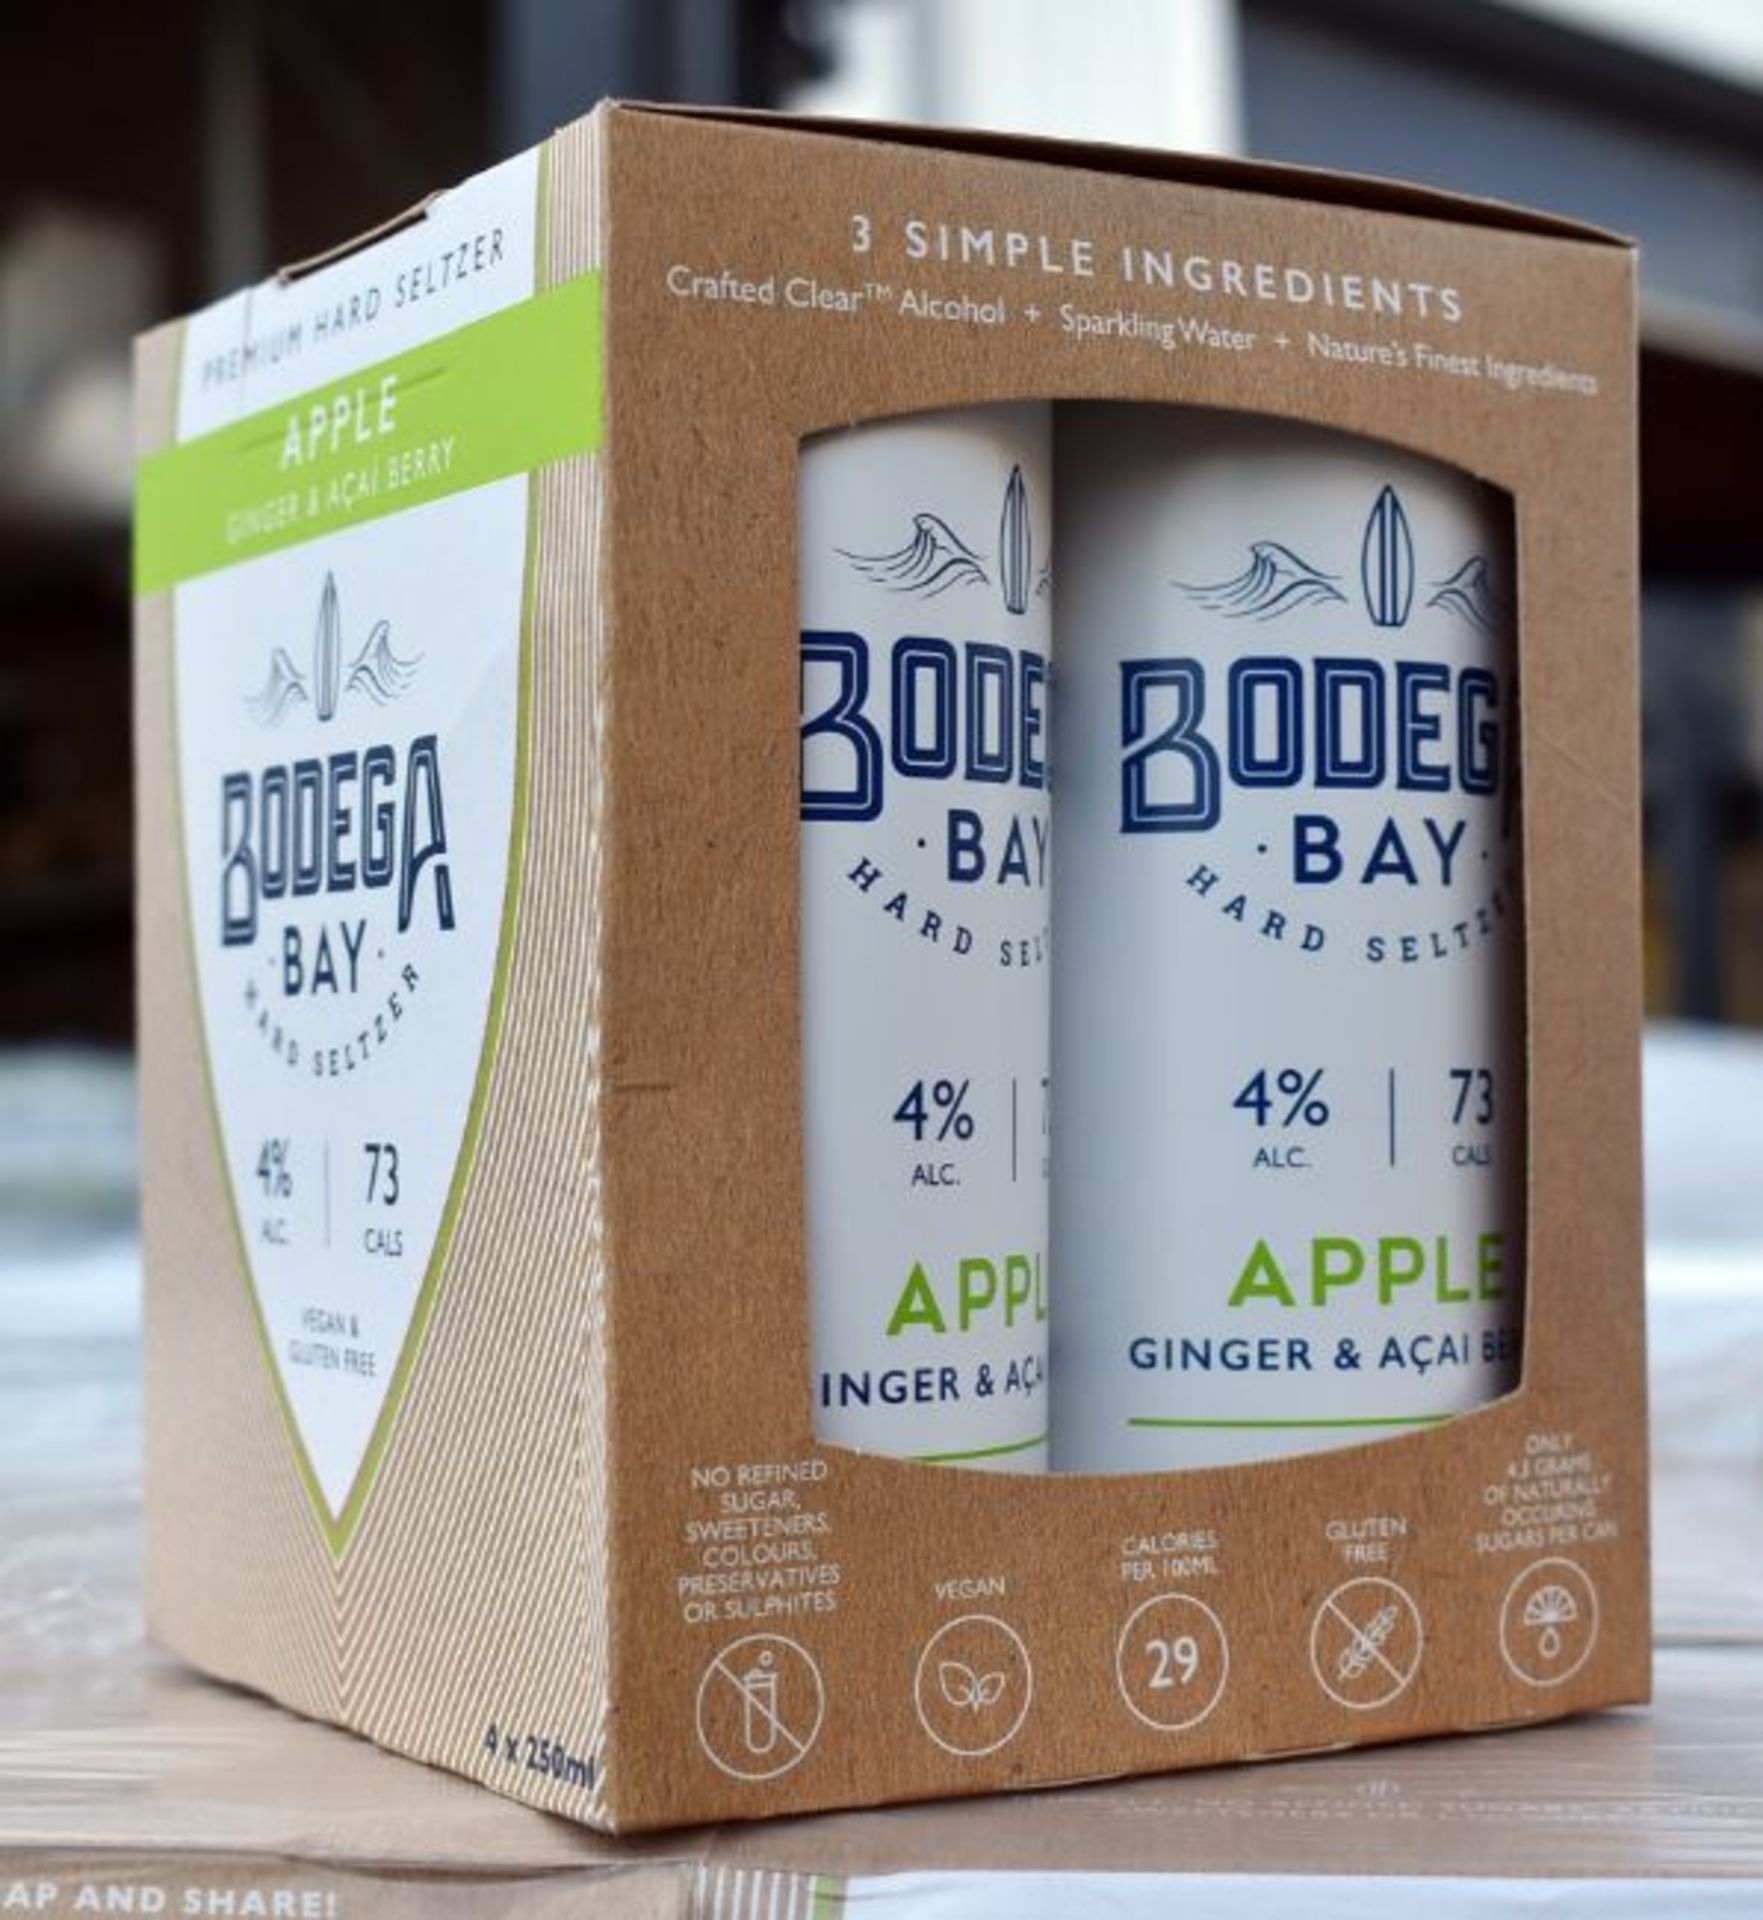 24 x Bodega Bay Hard Seltzer 250ml Alcoholic Sparkling Water Drinks - Apple Ginger & Acai Berry - Image 7 of 9